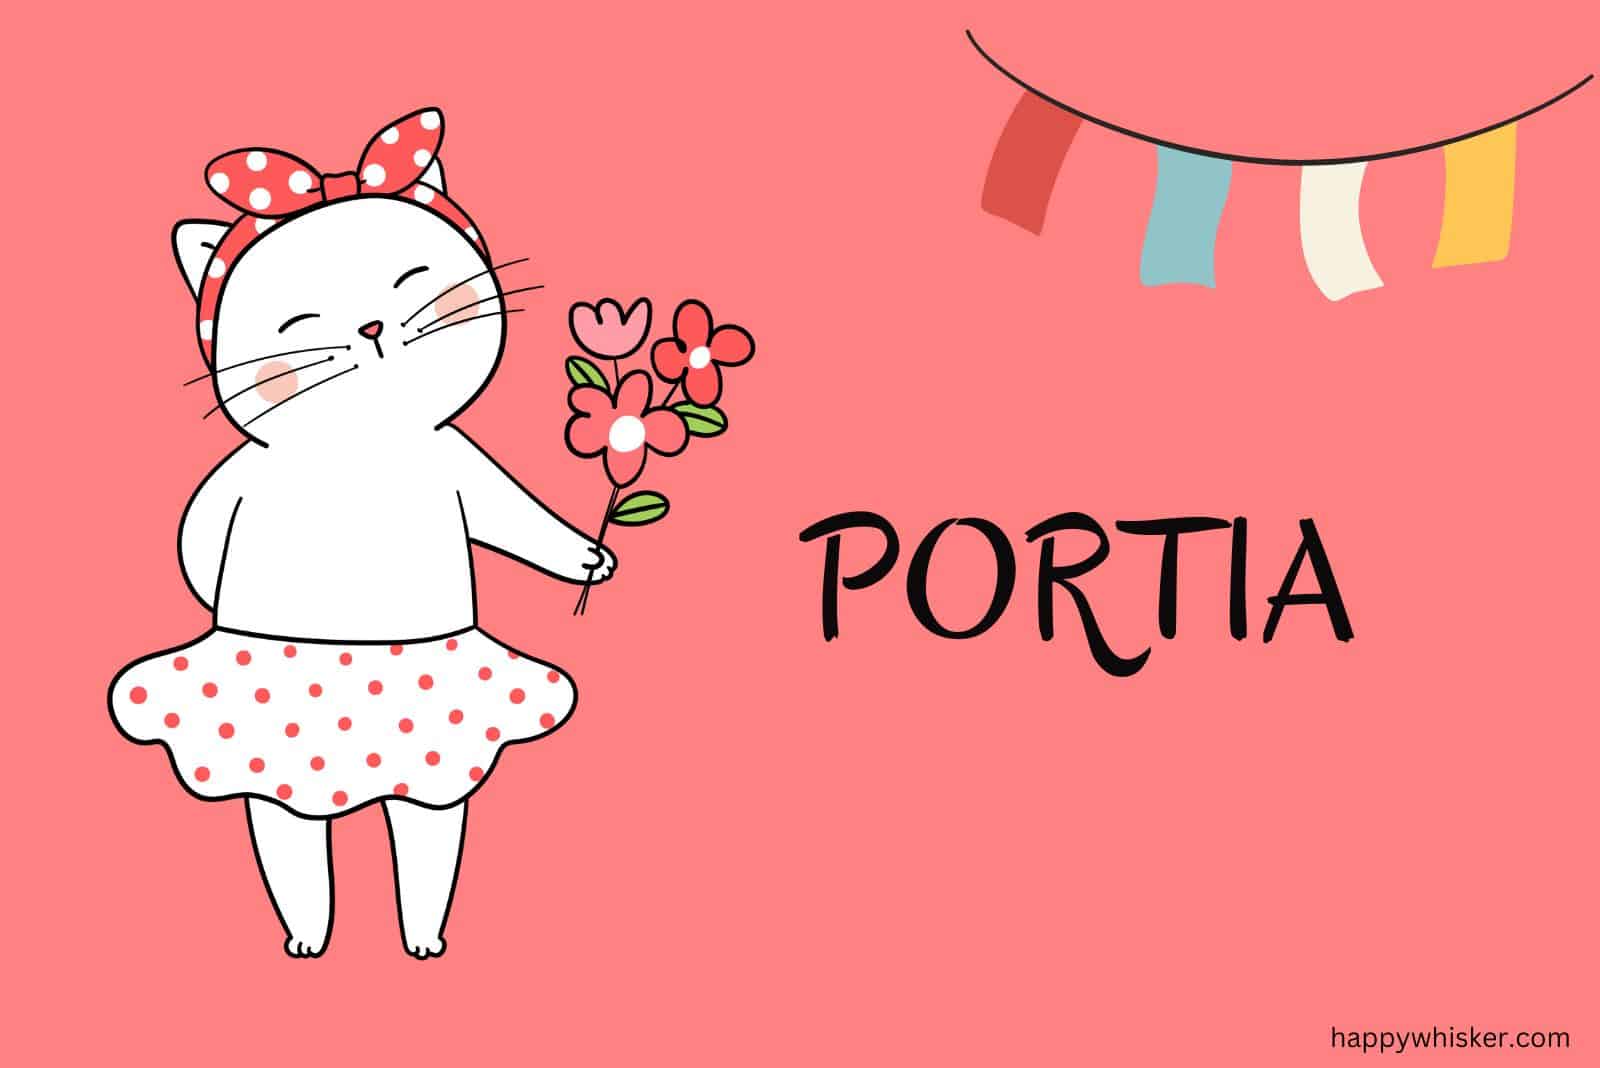 portia name and cat illustration